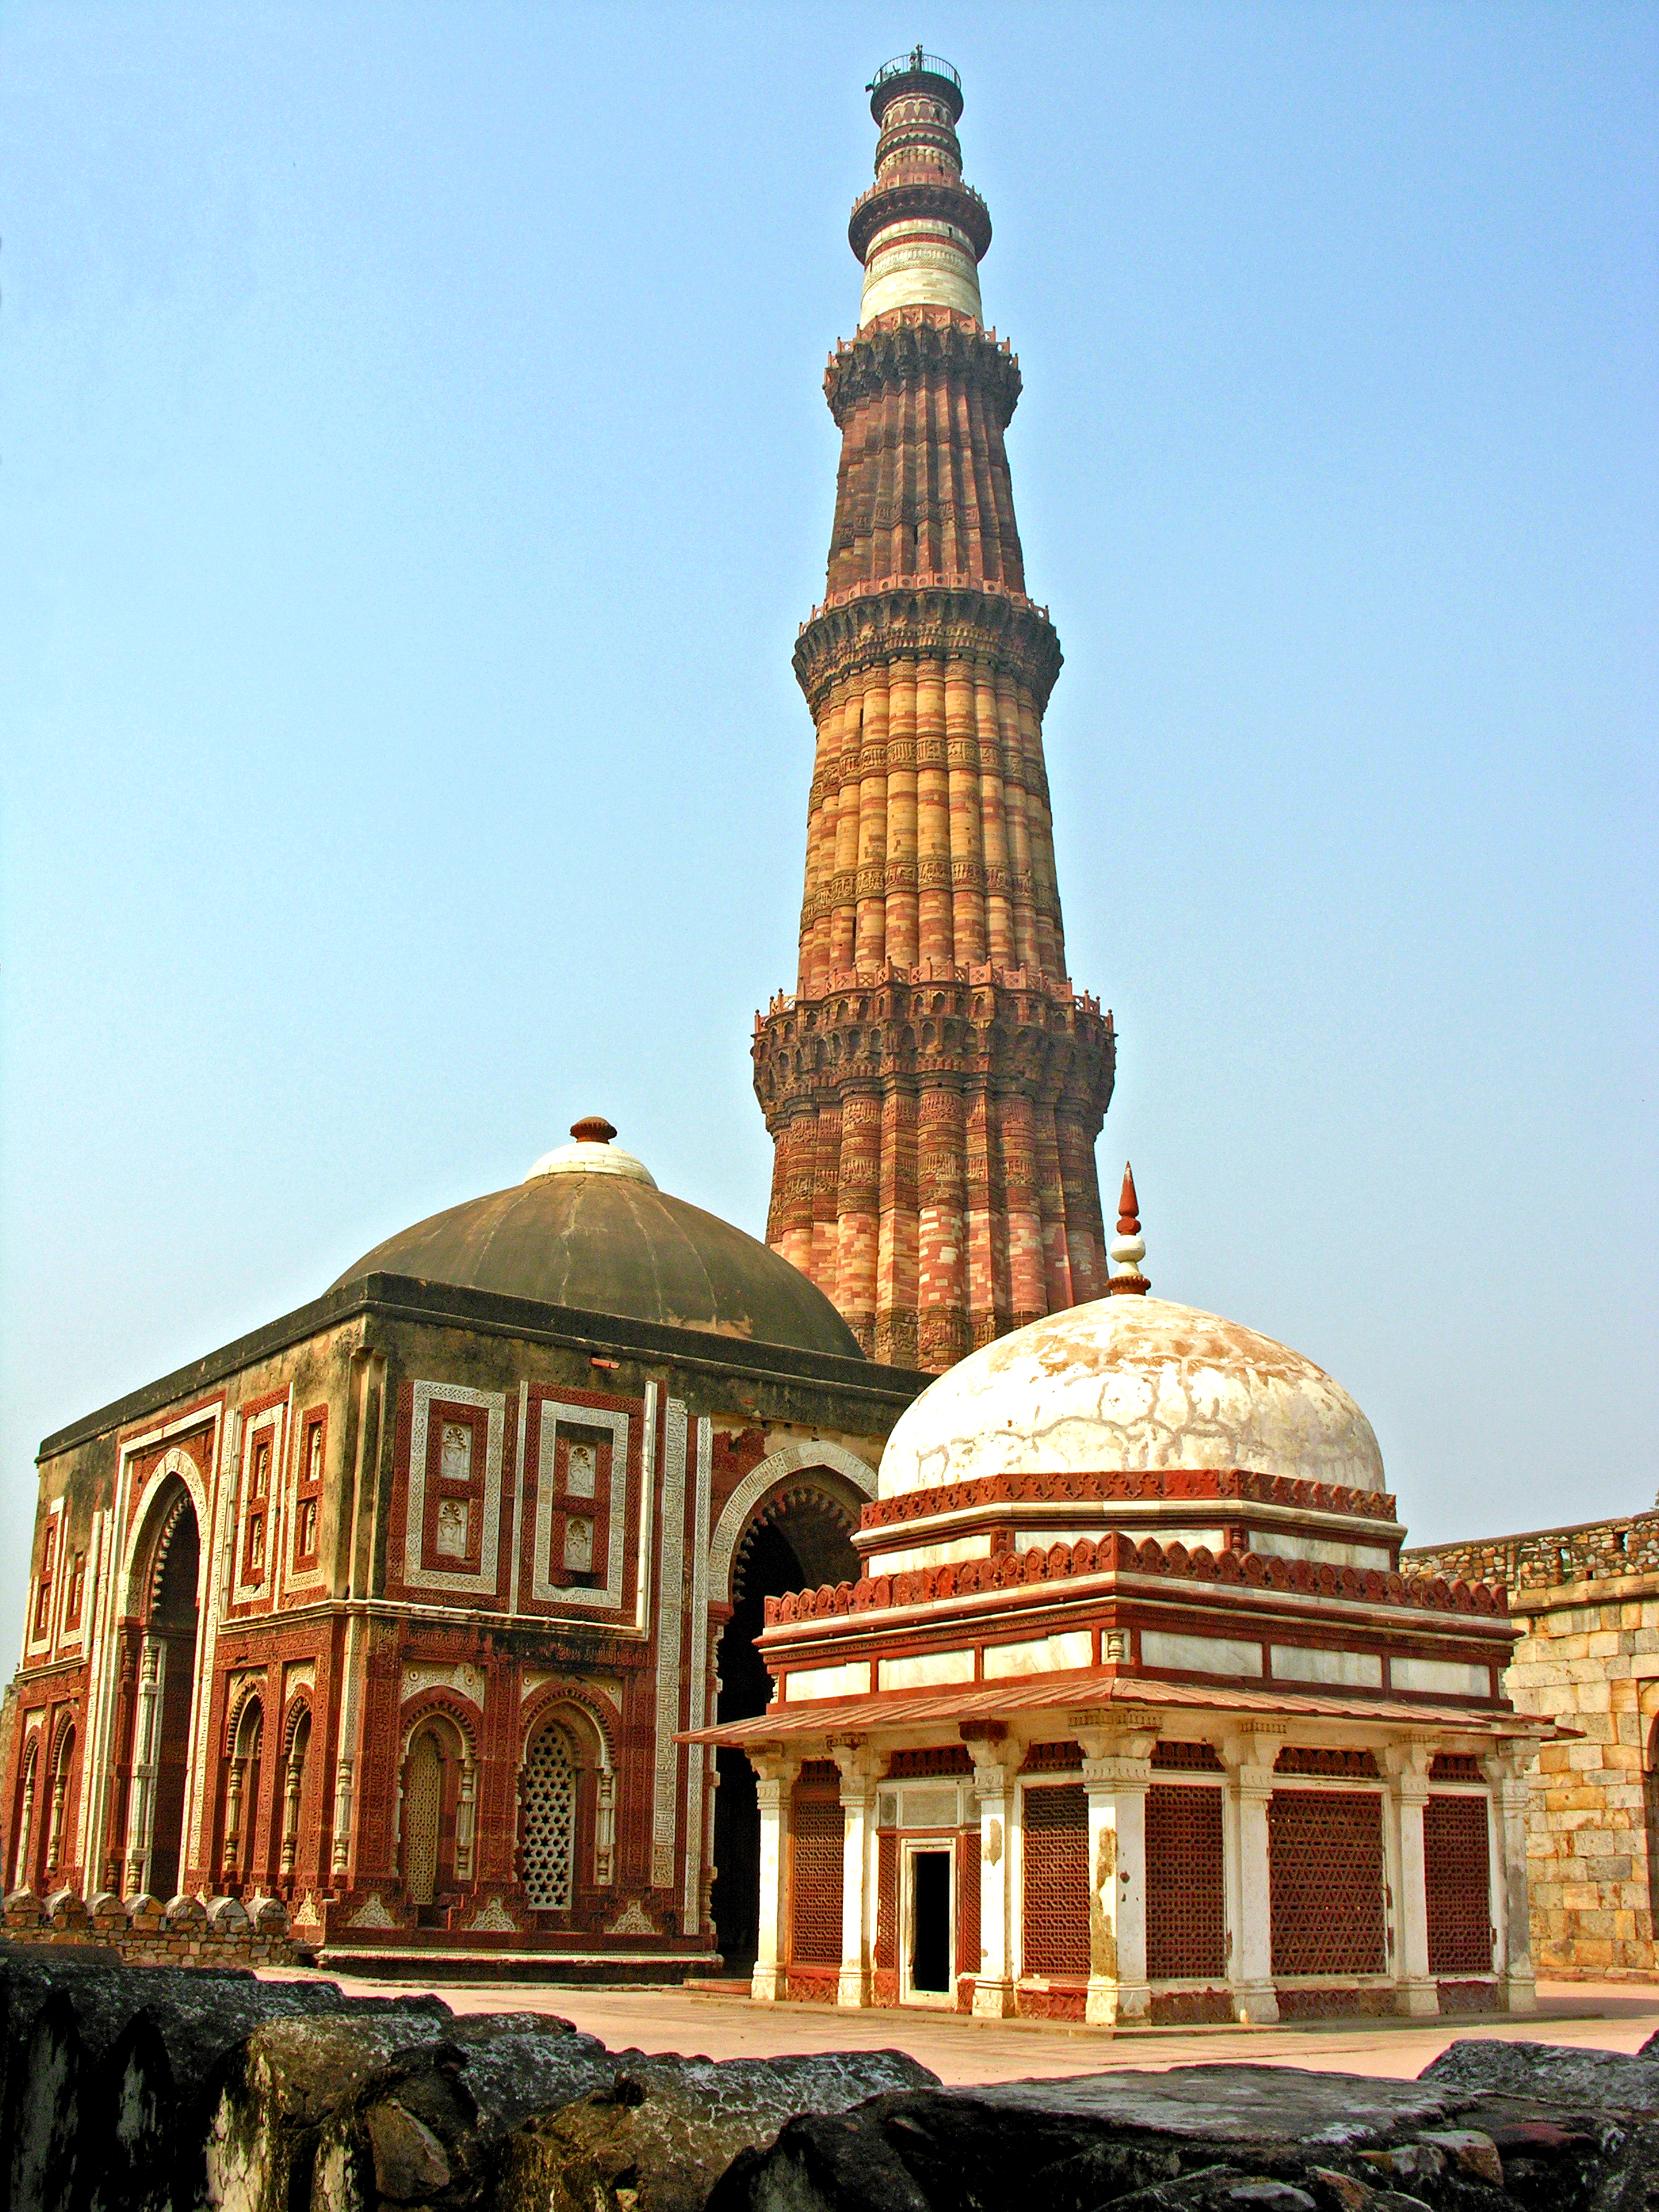 File:Alai Gate and Qutub Minar.jpg - Wikimedia Commons